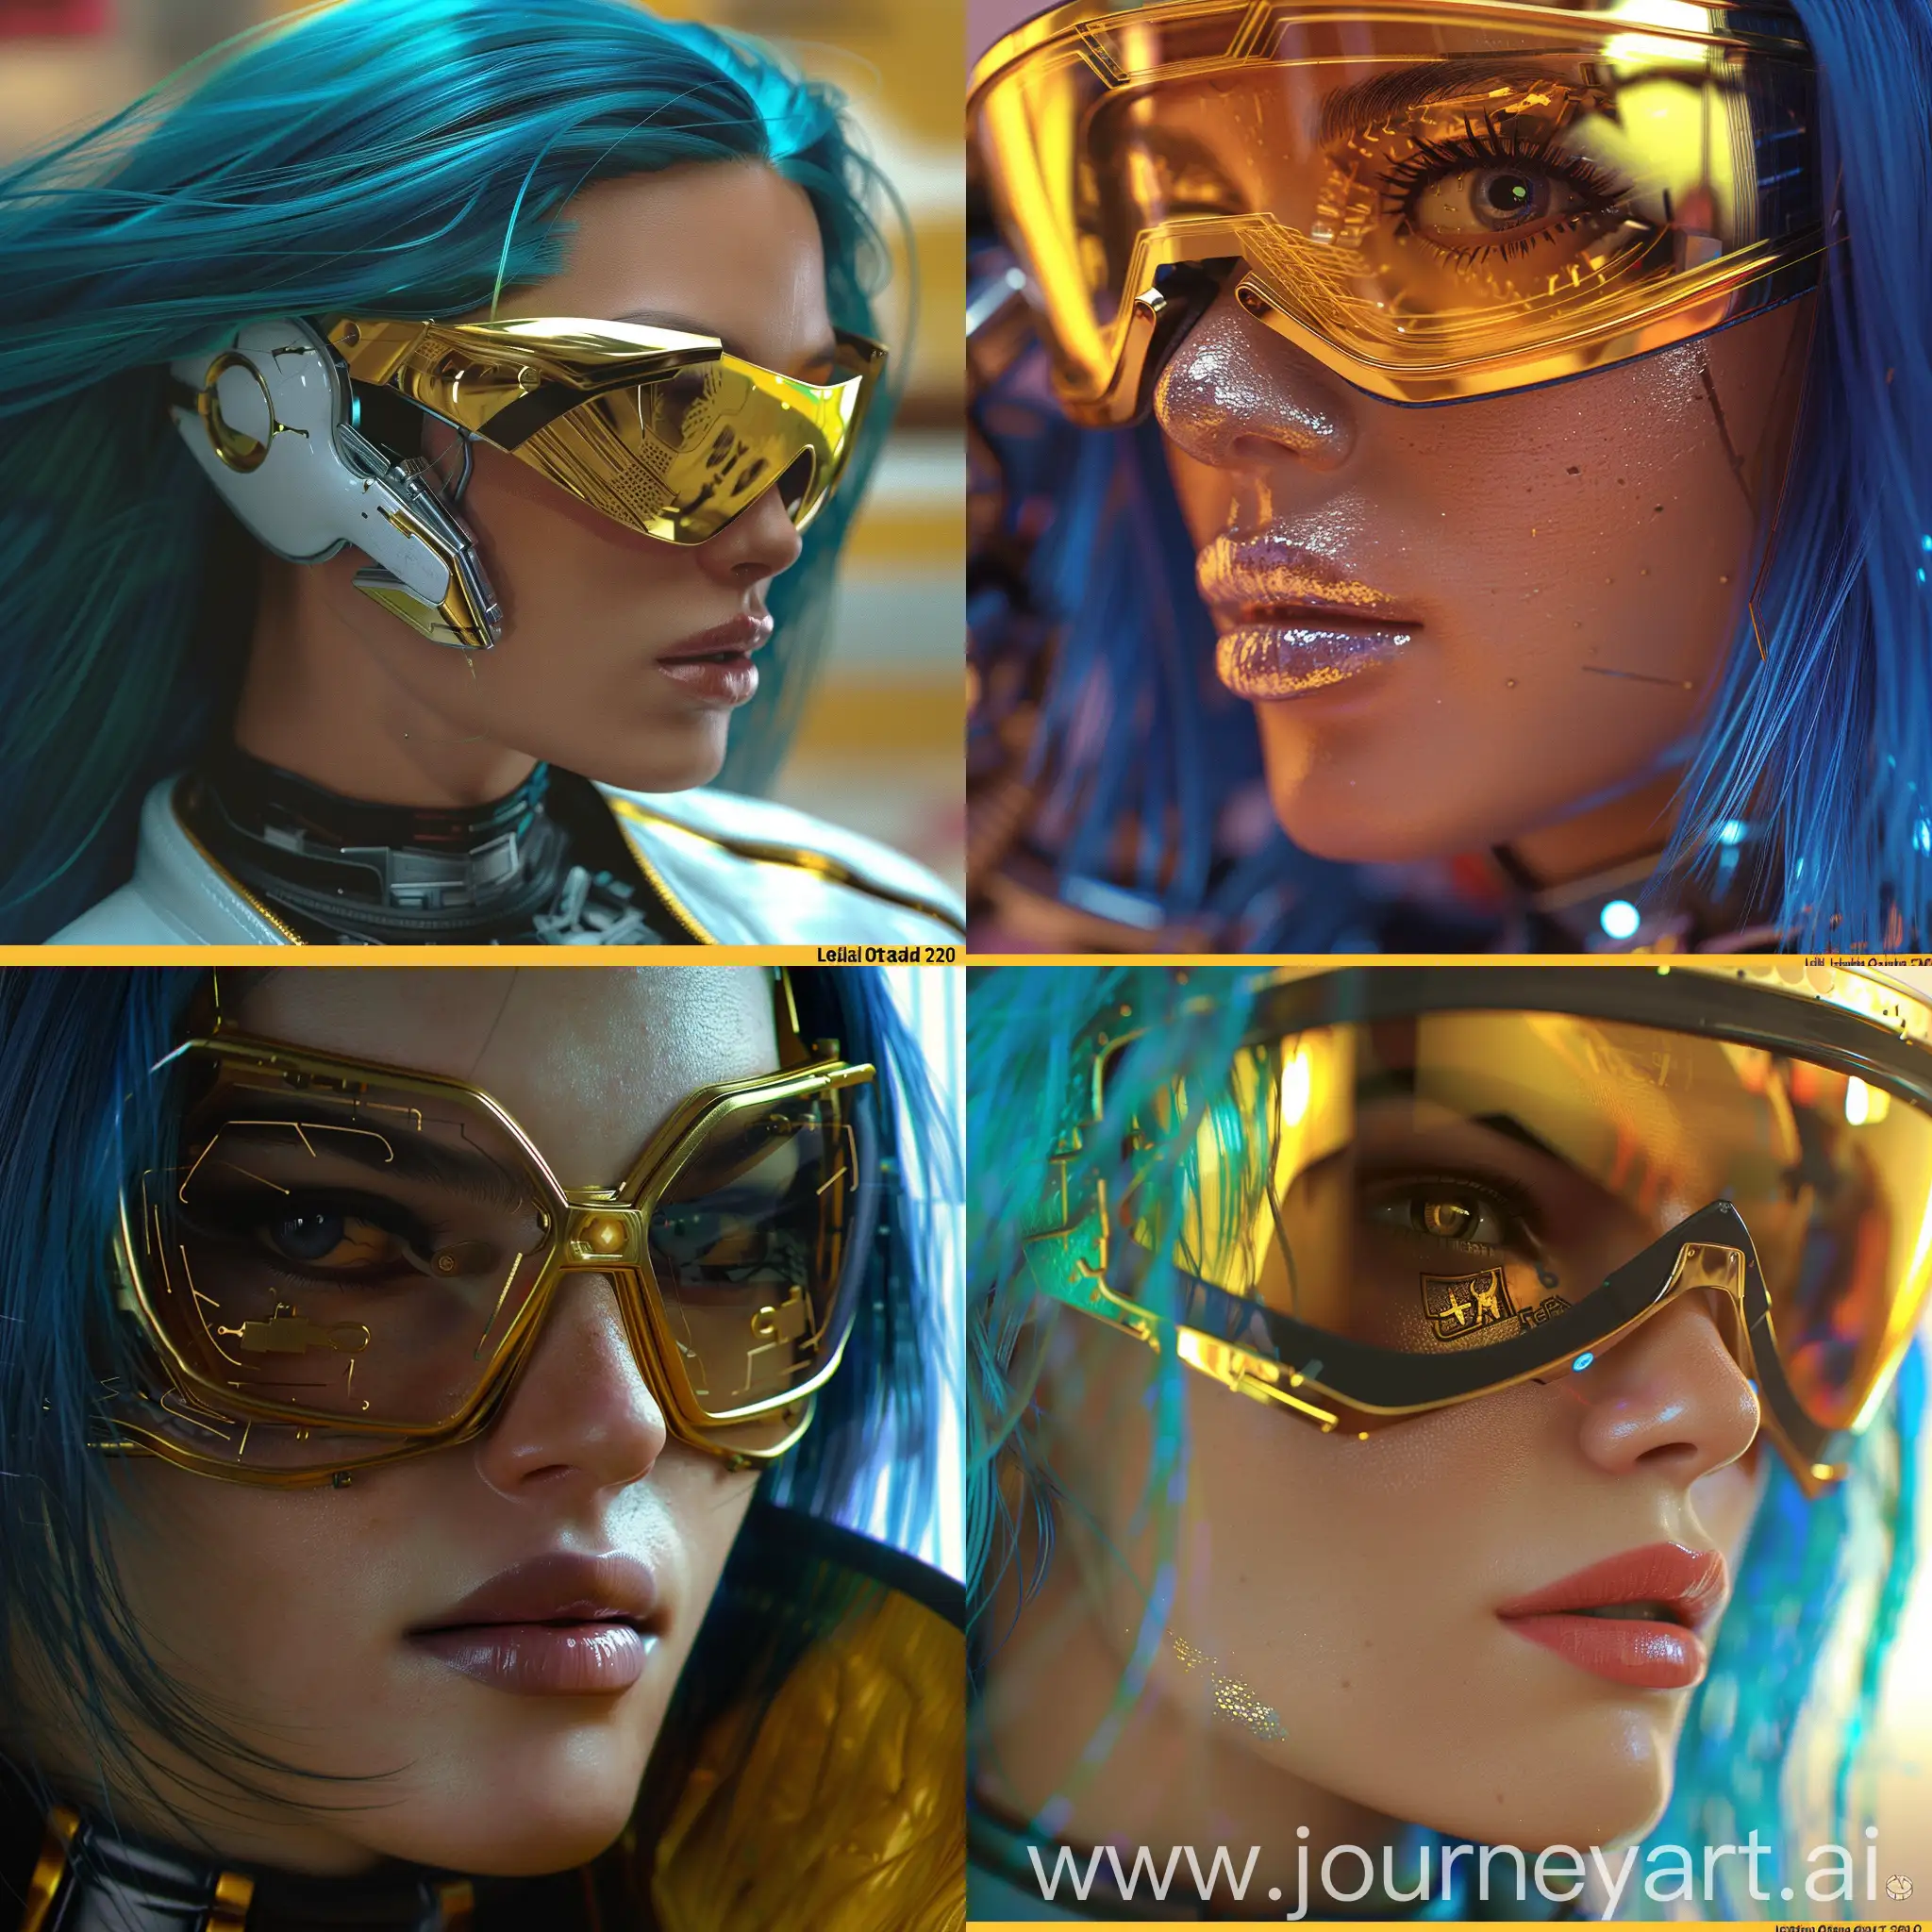 Cyberpunk-Femme-Fatale-Leila-Otadi-Iranian-Fighter-with-Realistic-Blue-Hair-in-Epic-Battle